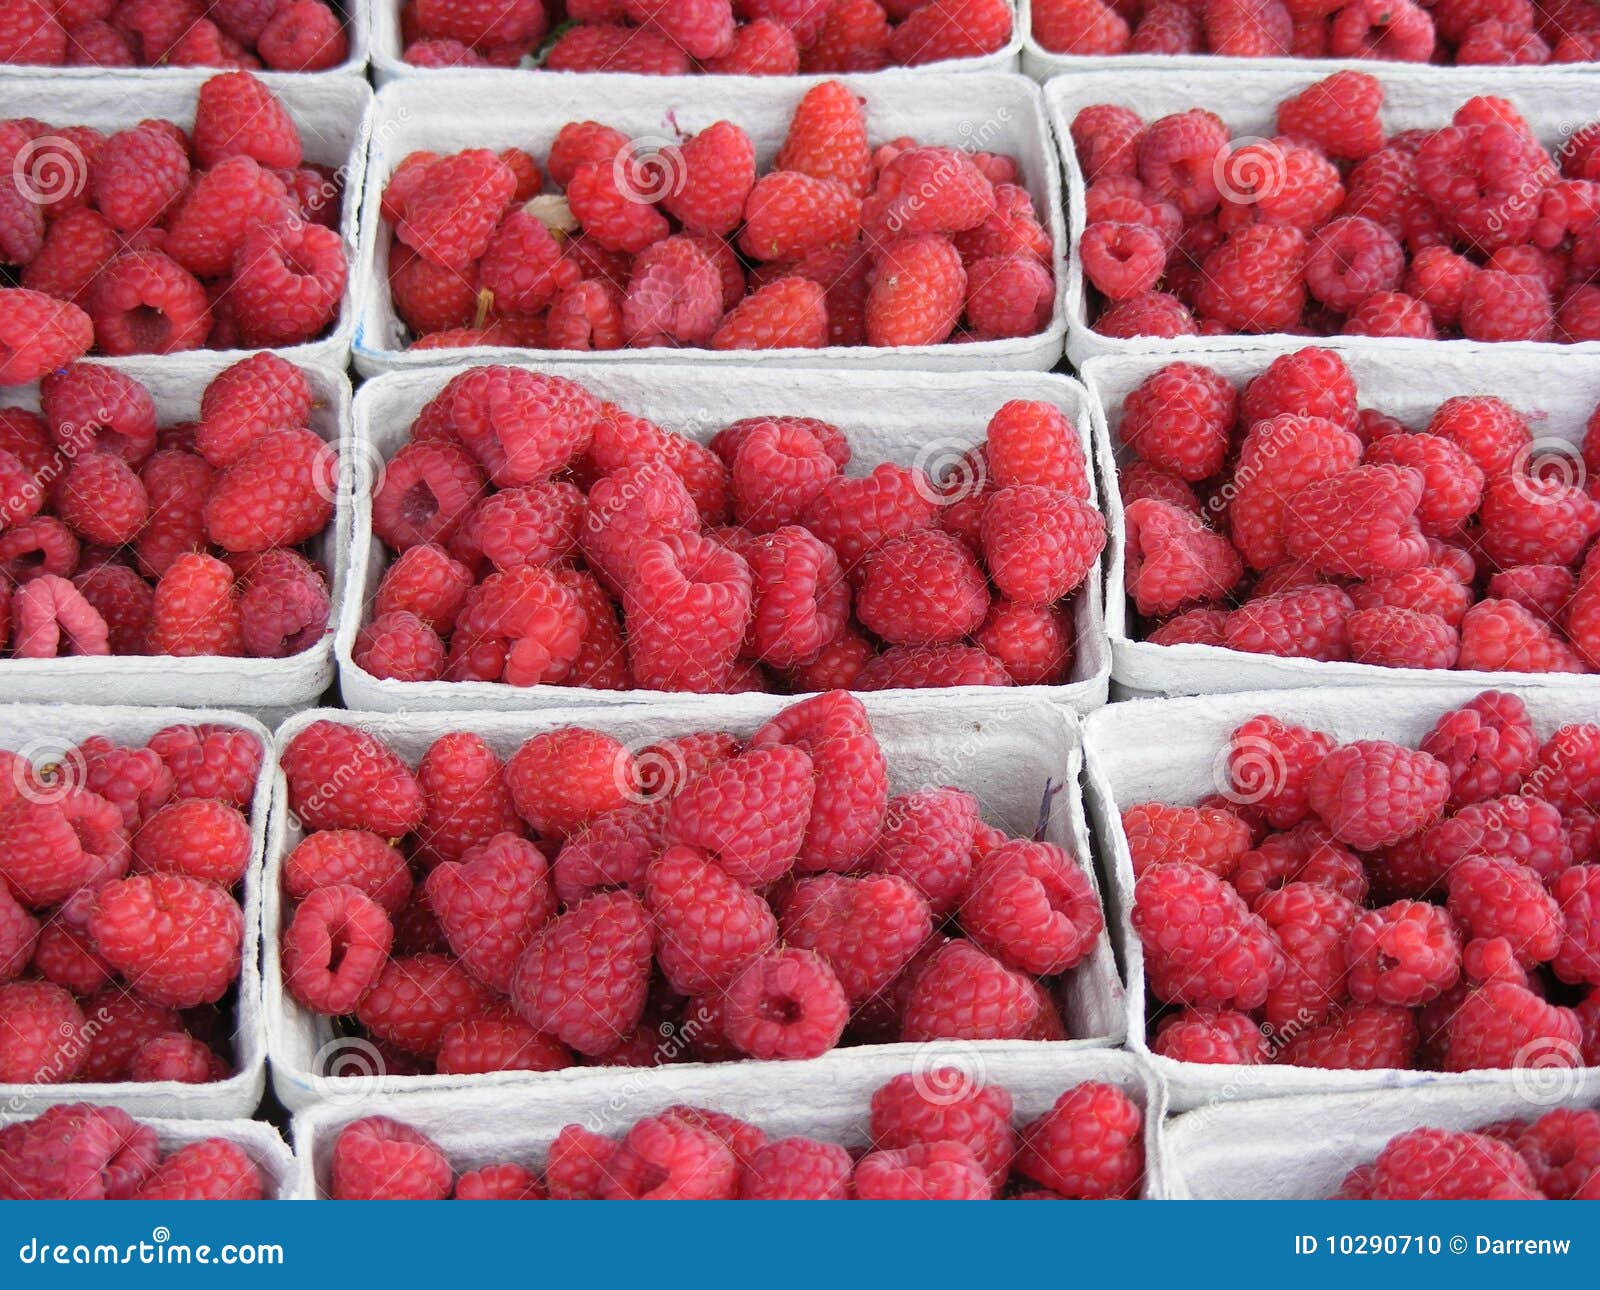 boxed raspberries